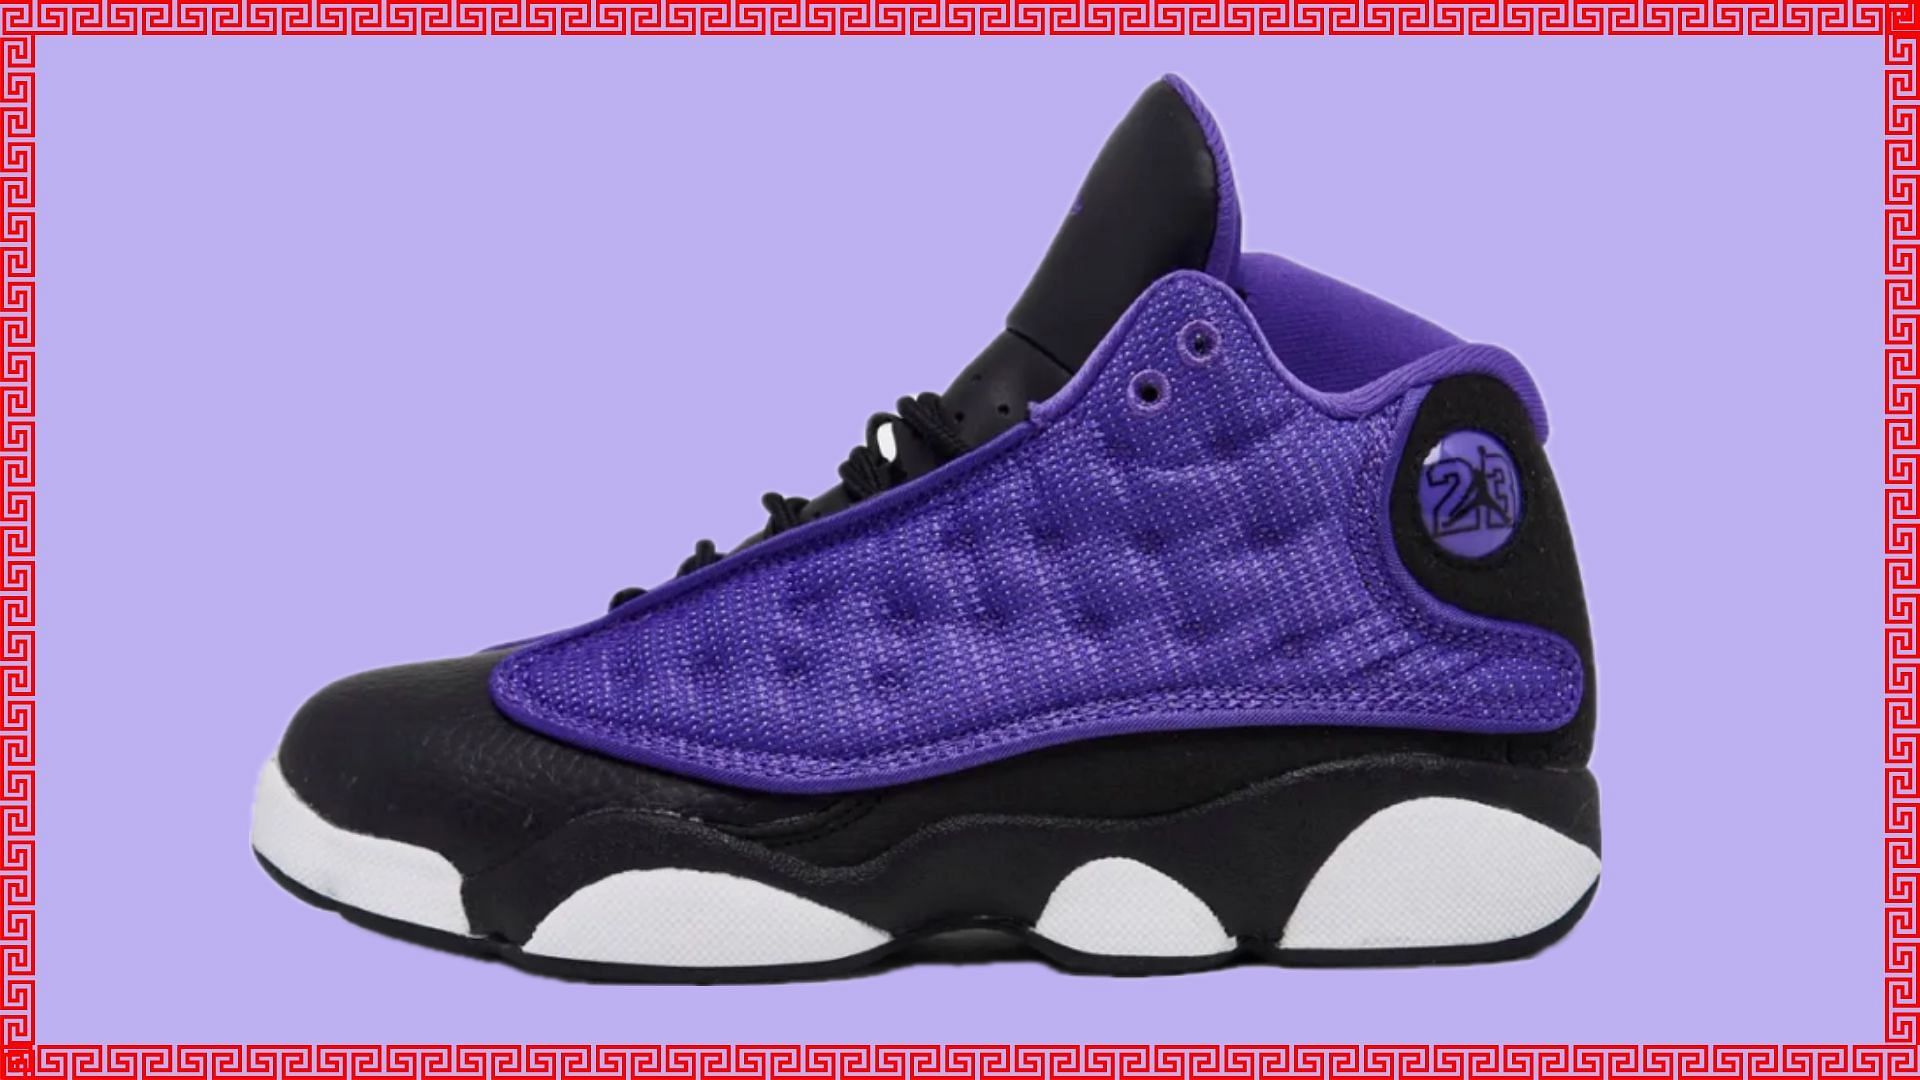 Air Jordan 13 Purple Venom shoes (Image via Instagram/@zsenakerheadz)